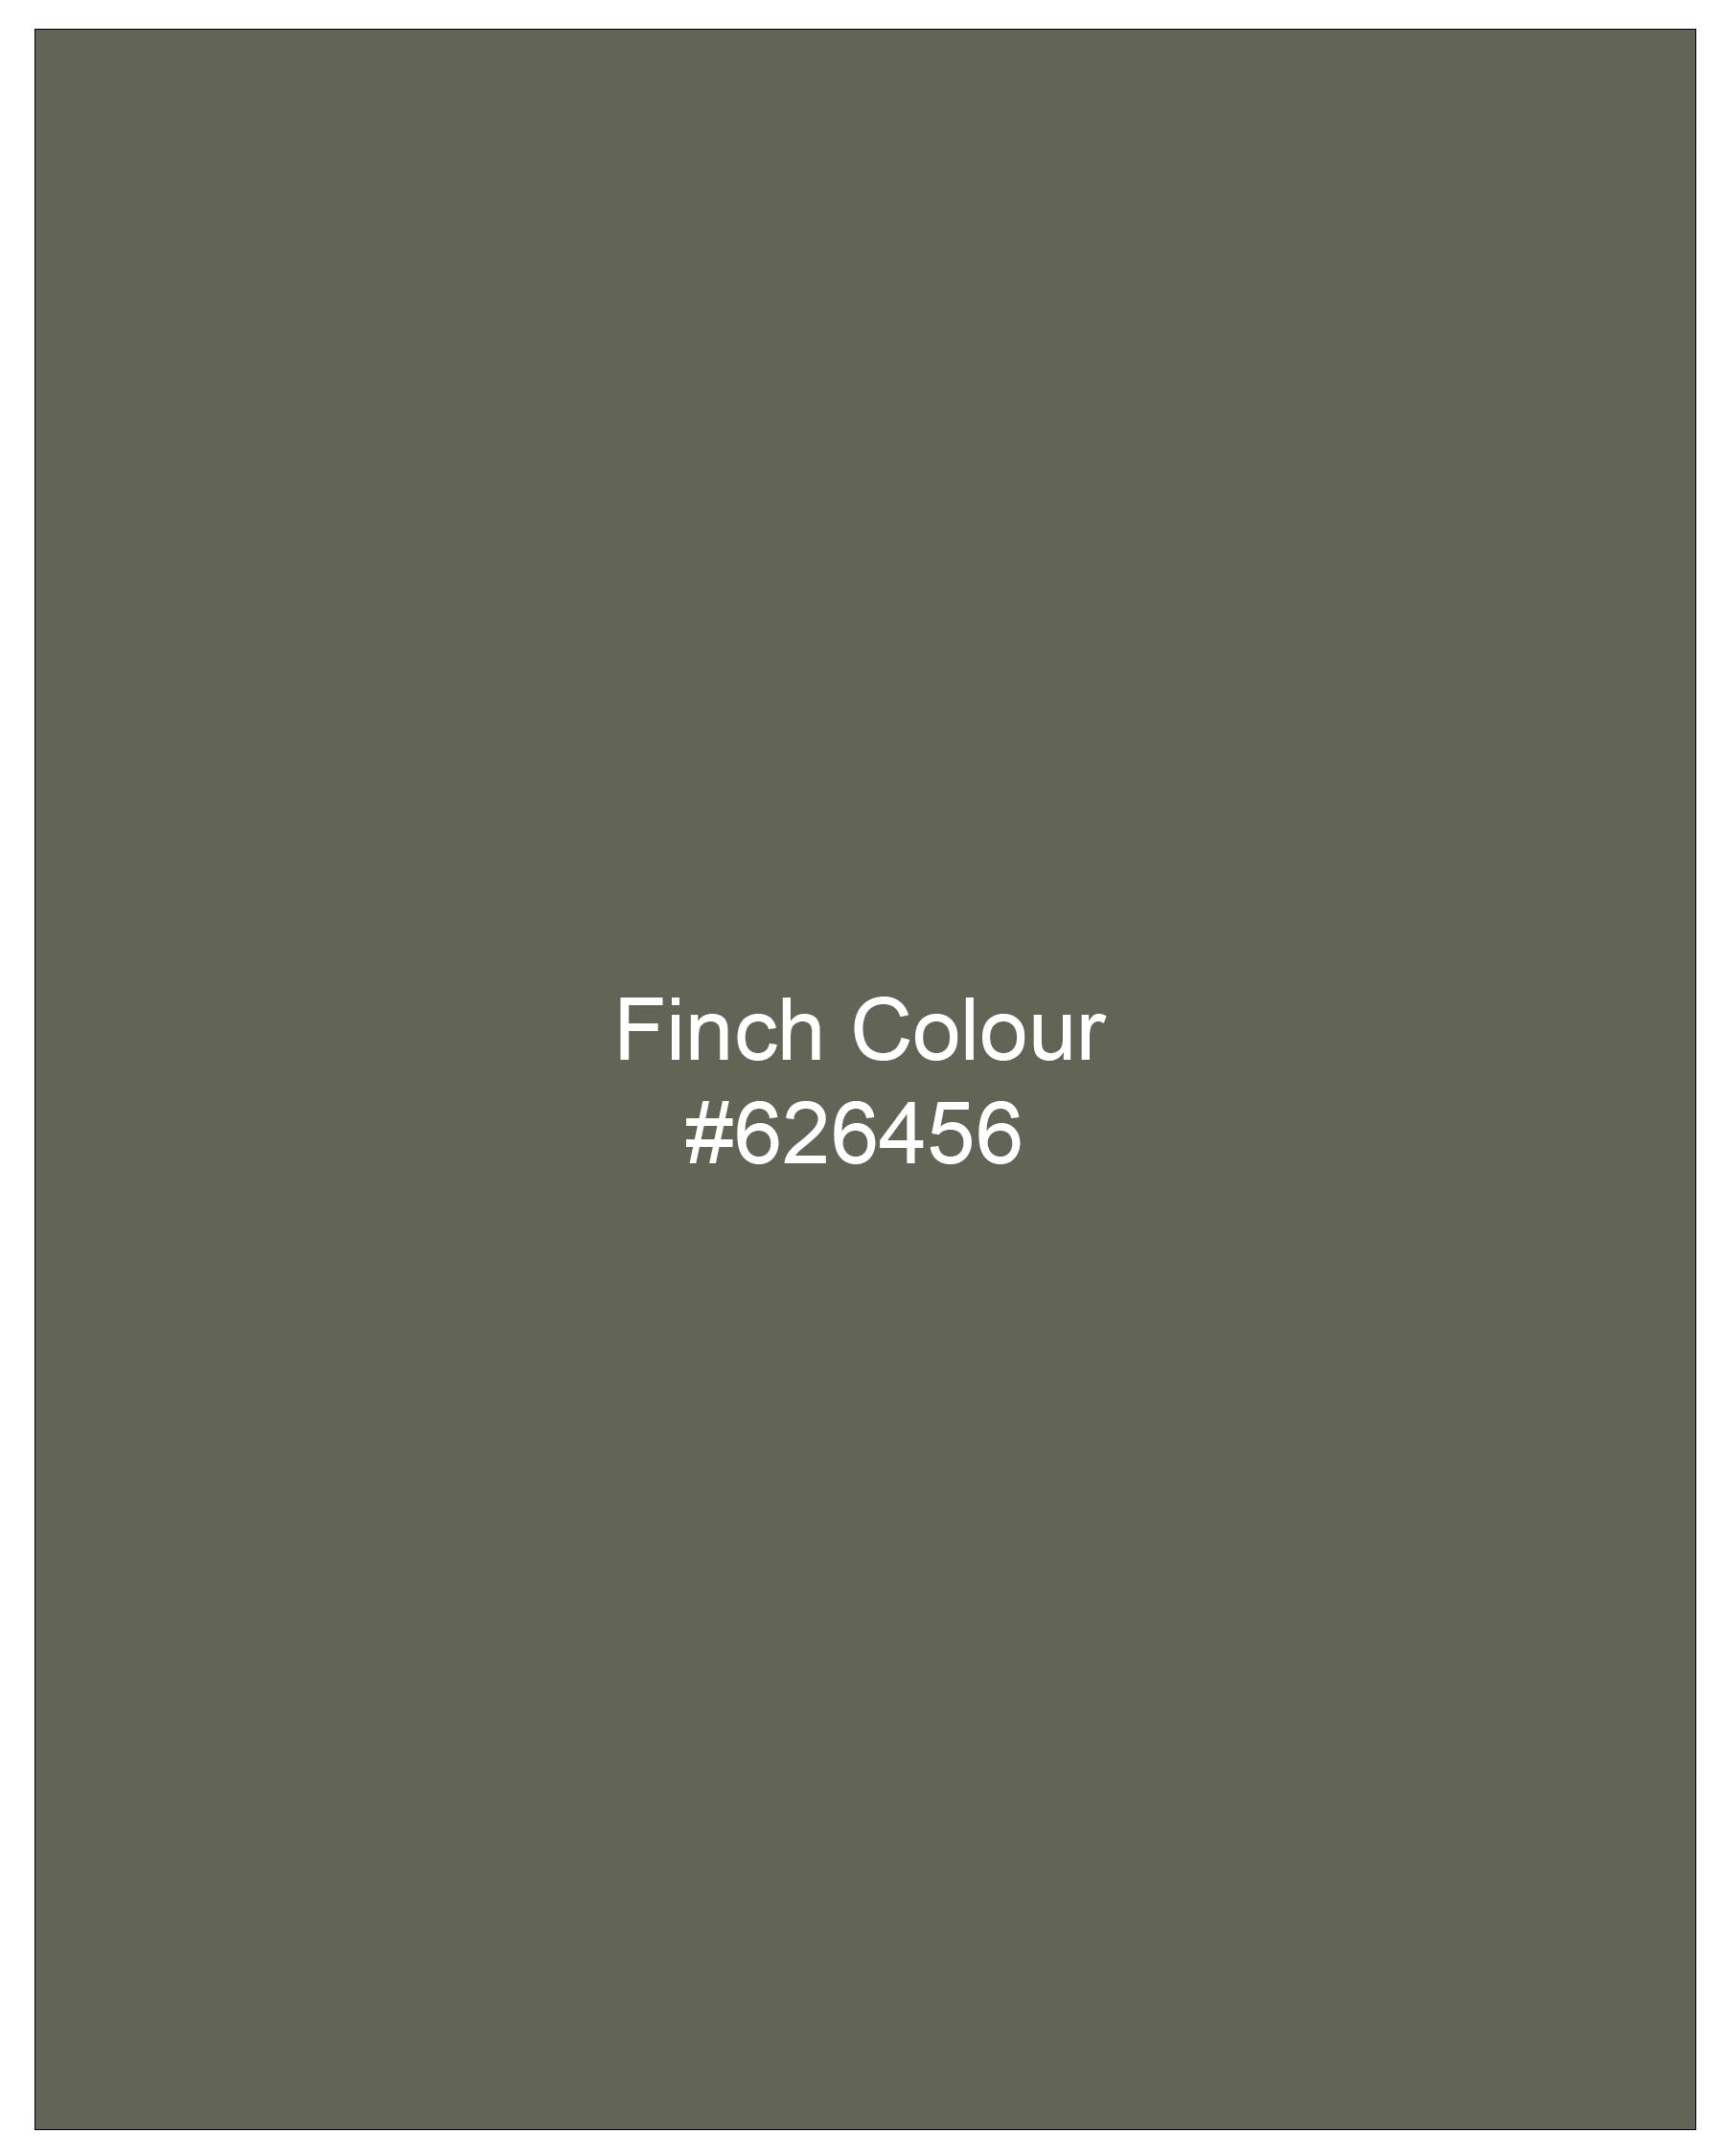 Finch Green Heavyweight Herringbone Striped Premium Cotton Over Shirt 6467-BD-BLK-FP-38,6467-BD-BLK-FP-H-38,6467-BD-BLK-FP-39,6467-BD-BLK-FP-H-39,6467-BD-BLK-FP-40,6467-BD-BLK-FP-H-40,6467-BD-BLK-FP-42,6467-BD-BLK-FP-H-42,6467-BD-BLK-FP-44,6467-BD-BLK-FP-H-44,6467-BD-BLK-FP-46,6467-BD-BLK-FP-H-46,6467-BD-BLK-FP-48,6467-BD-BLK-FP-H-48,6467-BD-BLK-FP-50,6467-BD-BLK-FP-H-50,6467-BD-BLK-FP-52,6467-BD-BLK-FP-H-52